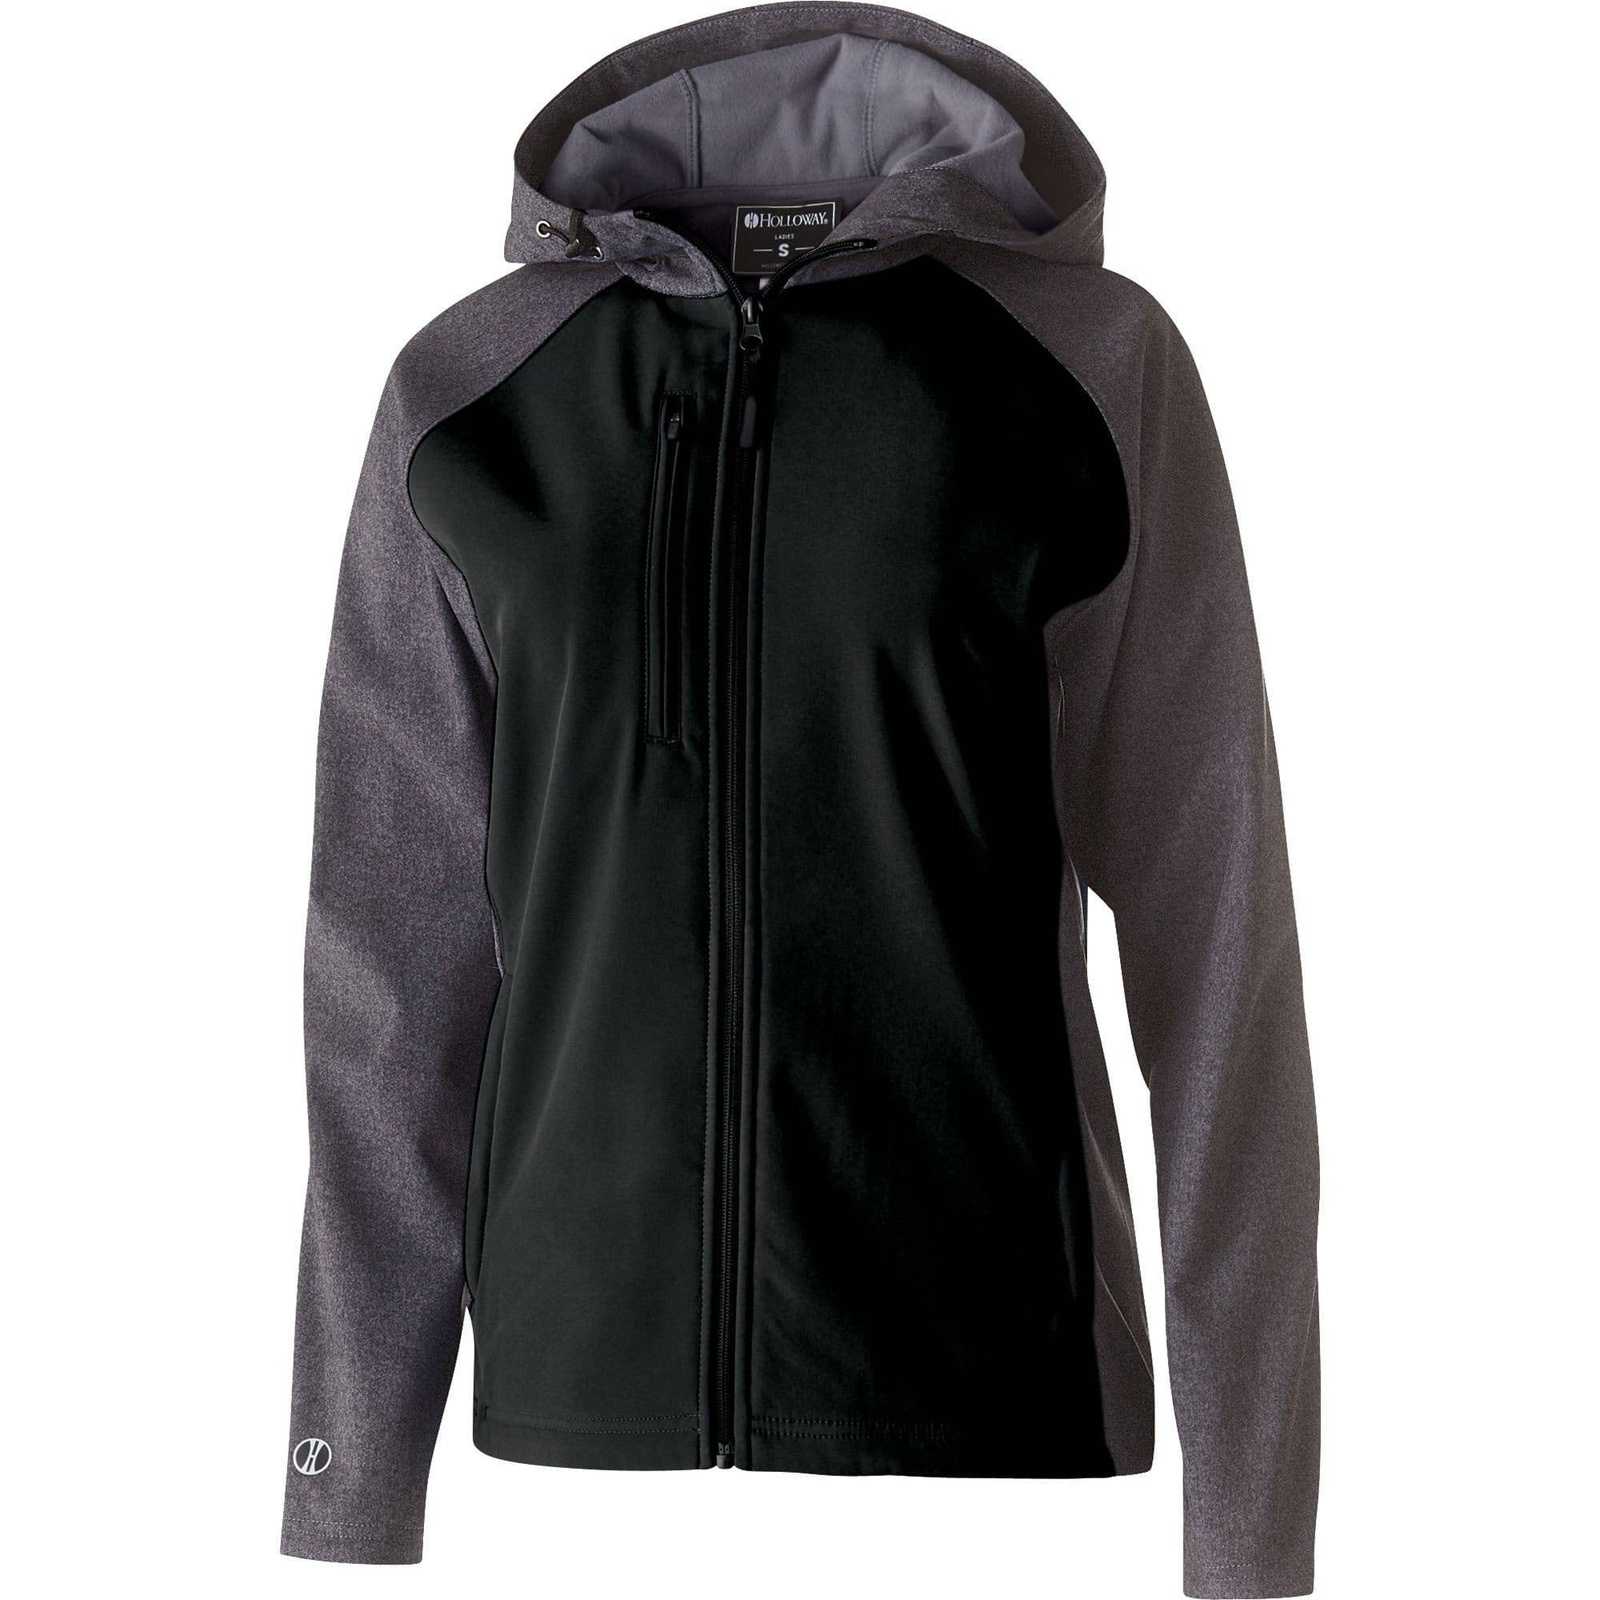 Holloway 229357 Ladies' Raider Softshell Jacket - Carbon Print Black - HIT a Double